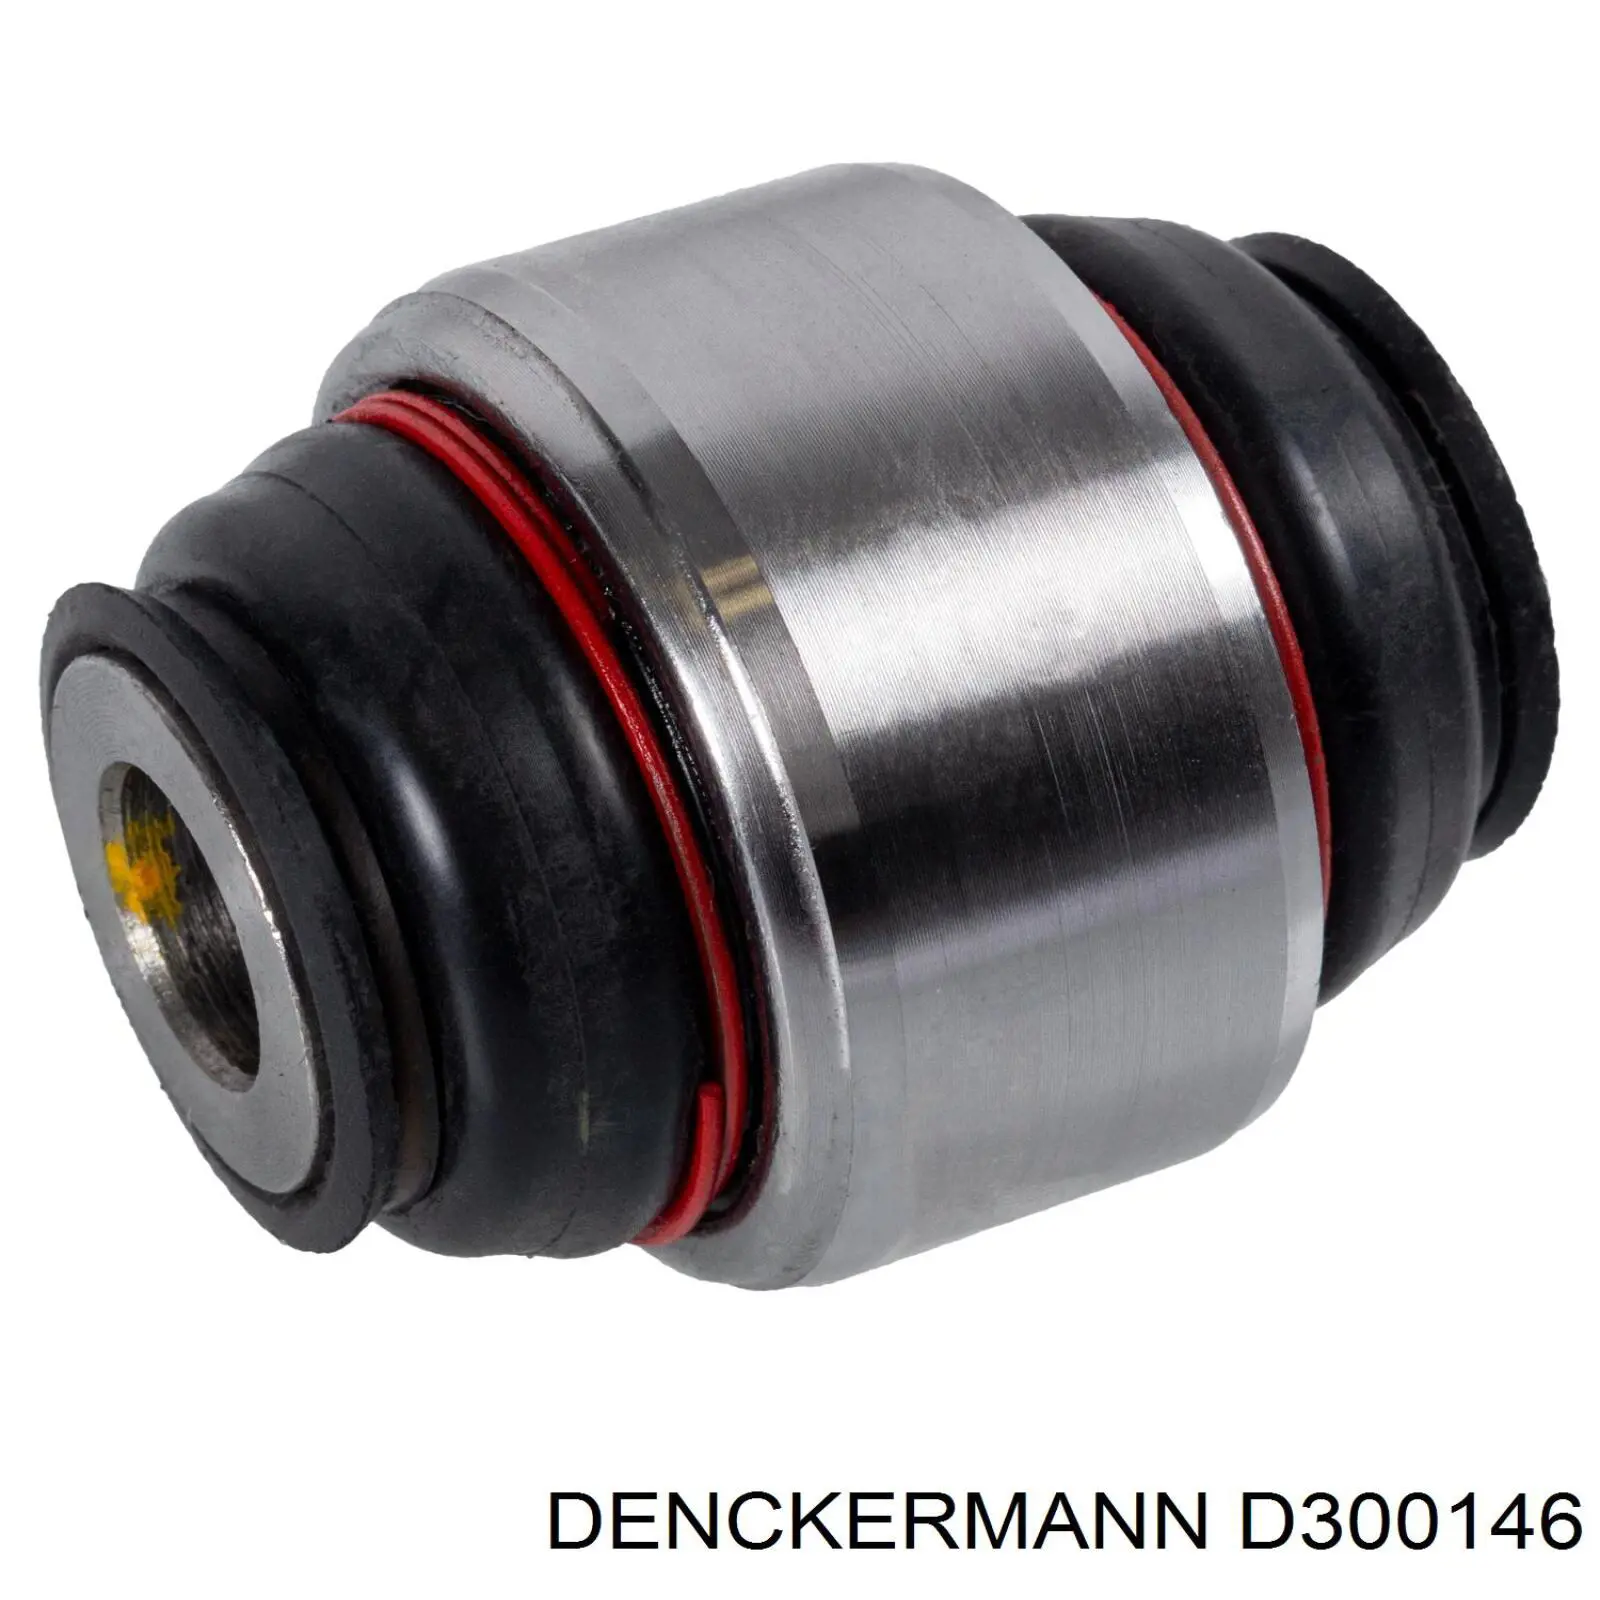 D300146 Denckermann